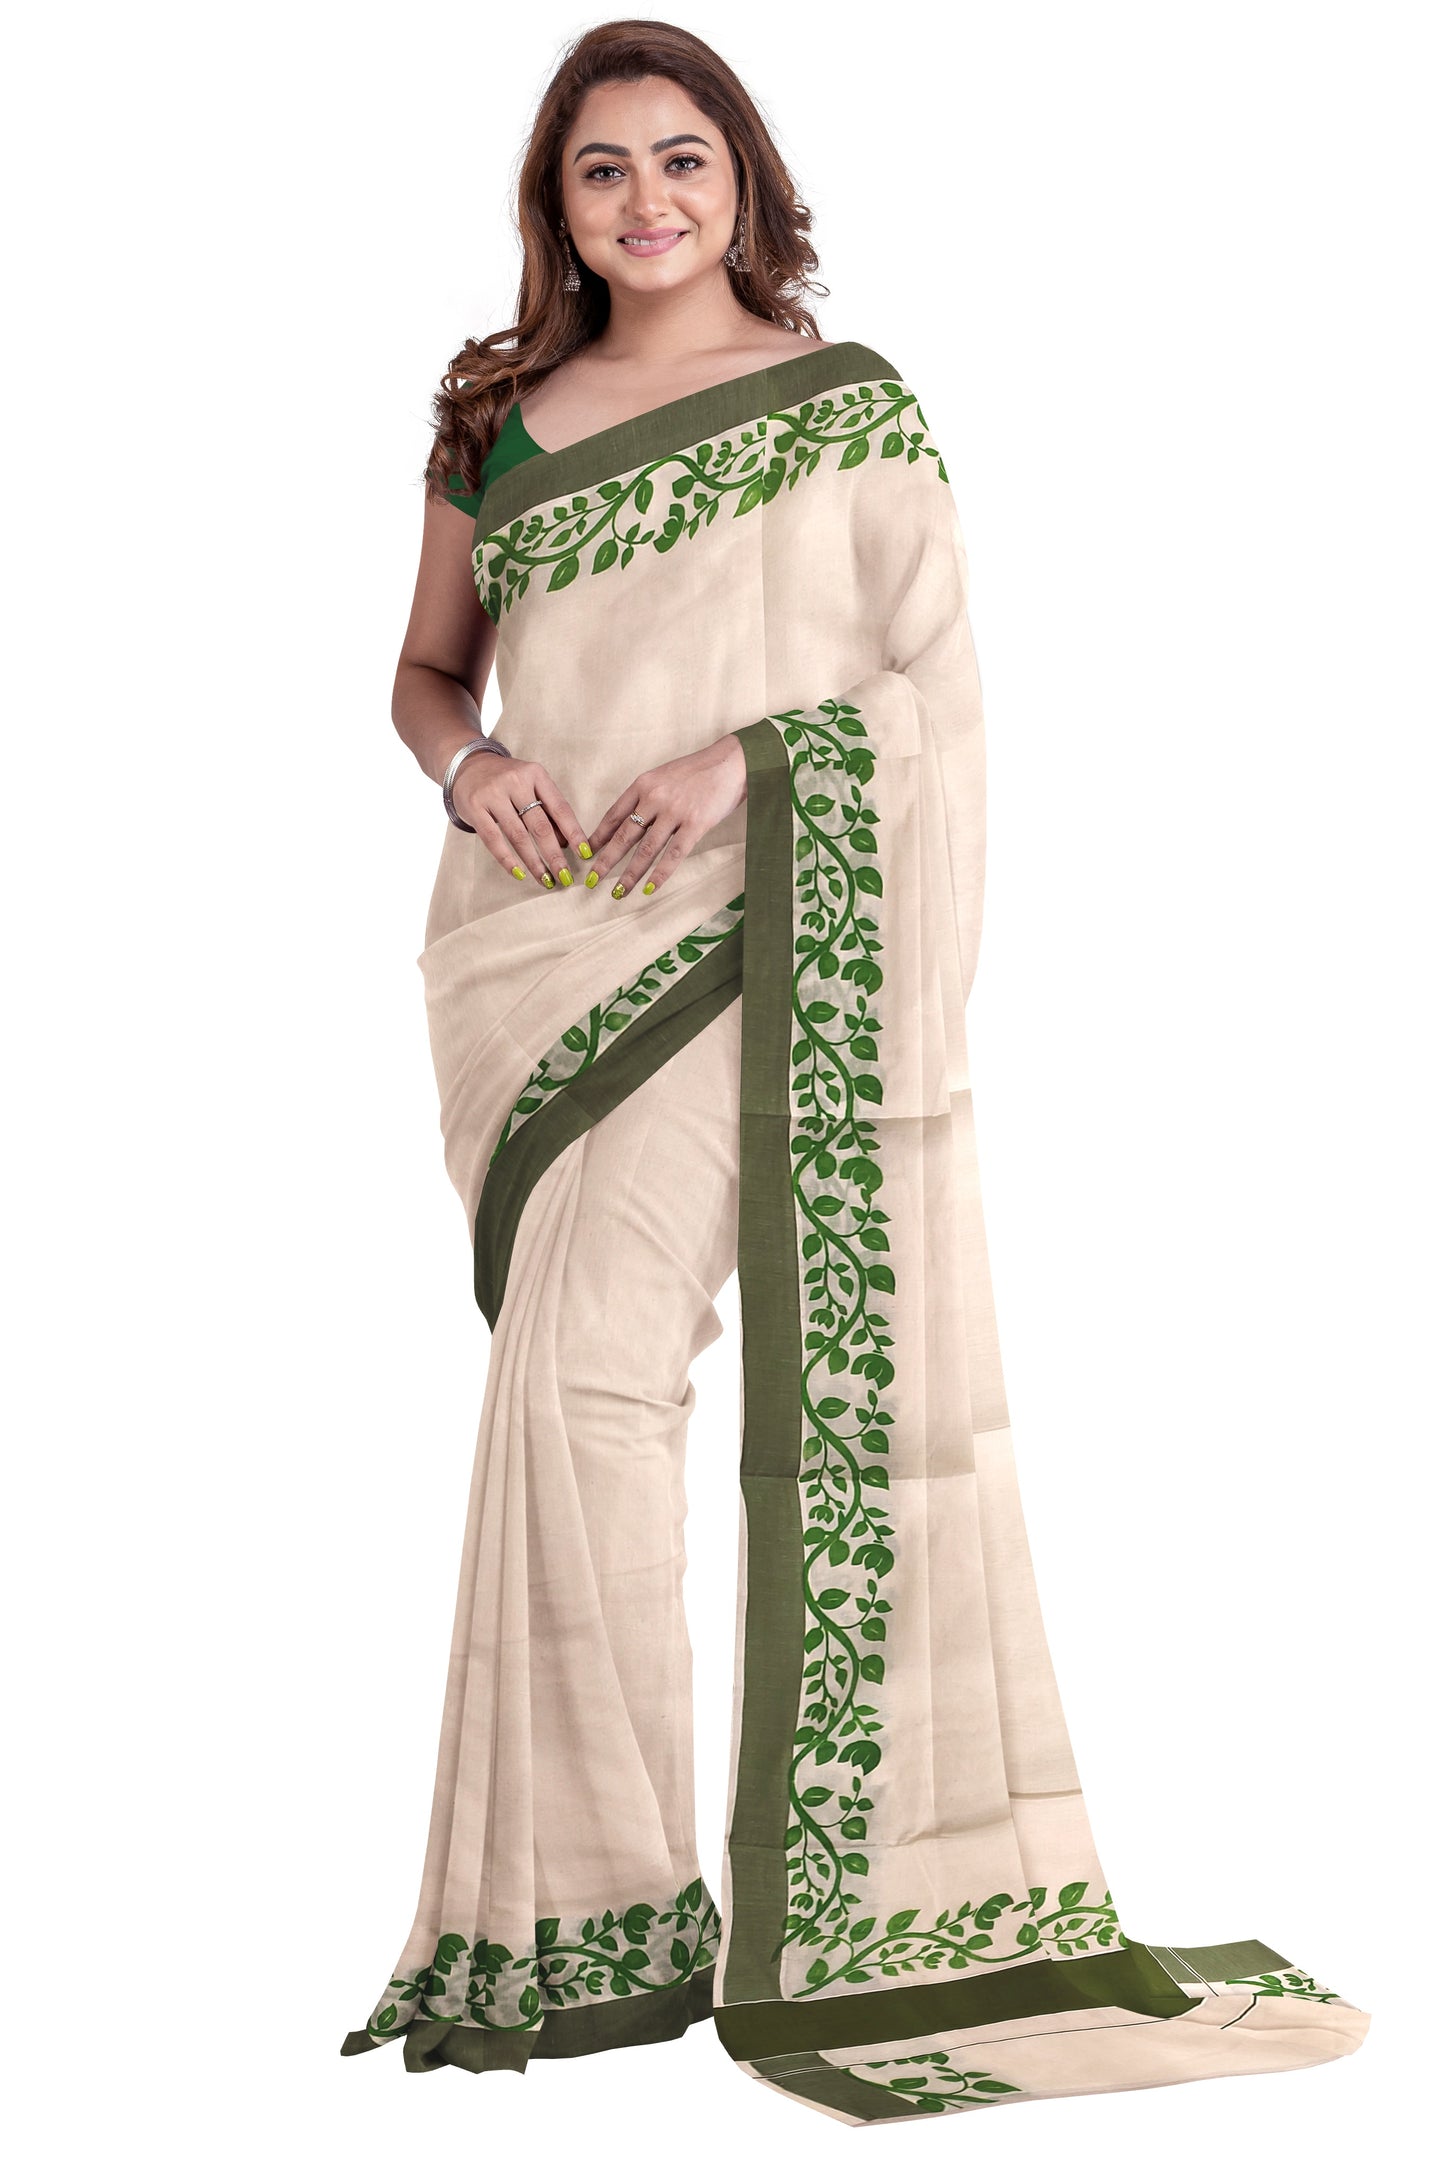 Southloom Original Design Onam Kerala Saree with Olive Green Floral Vines Block Print